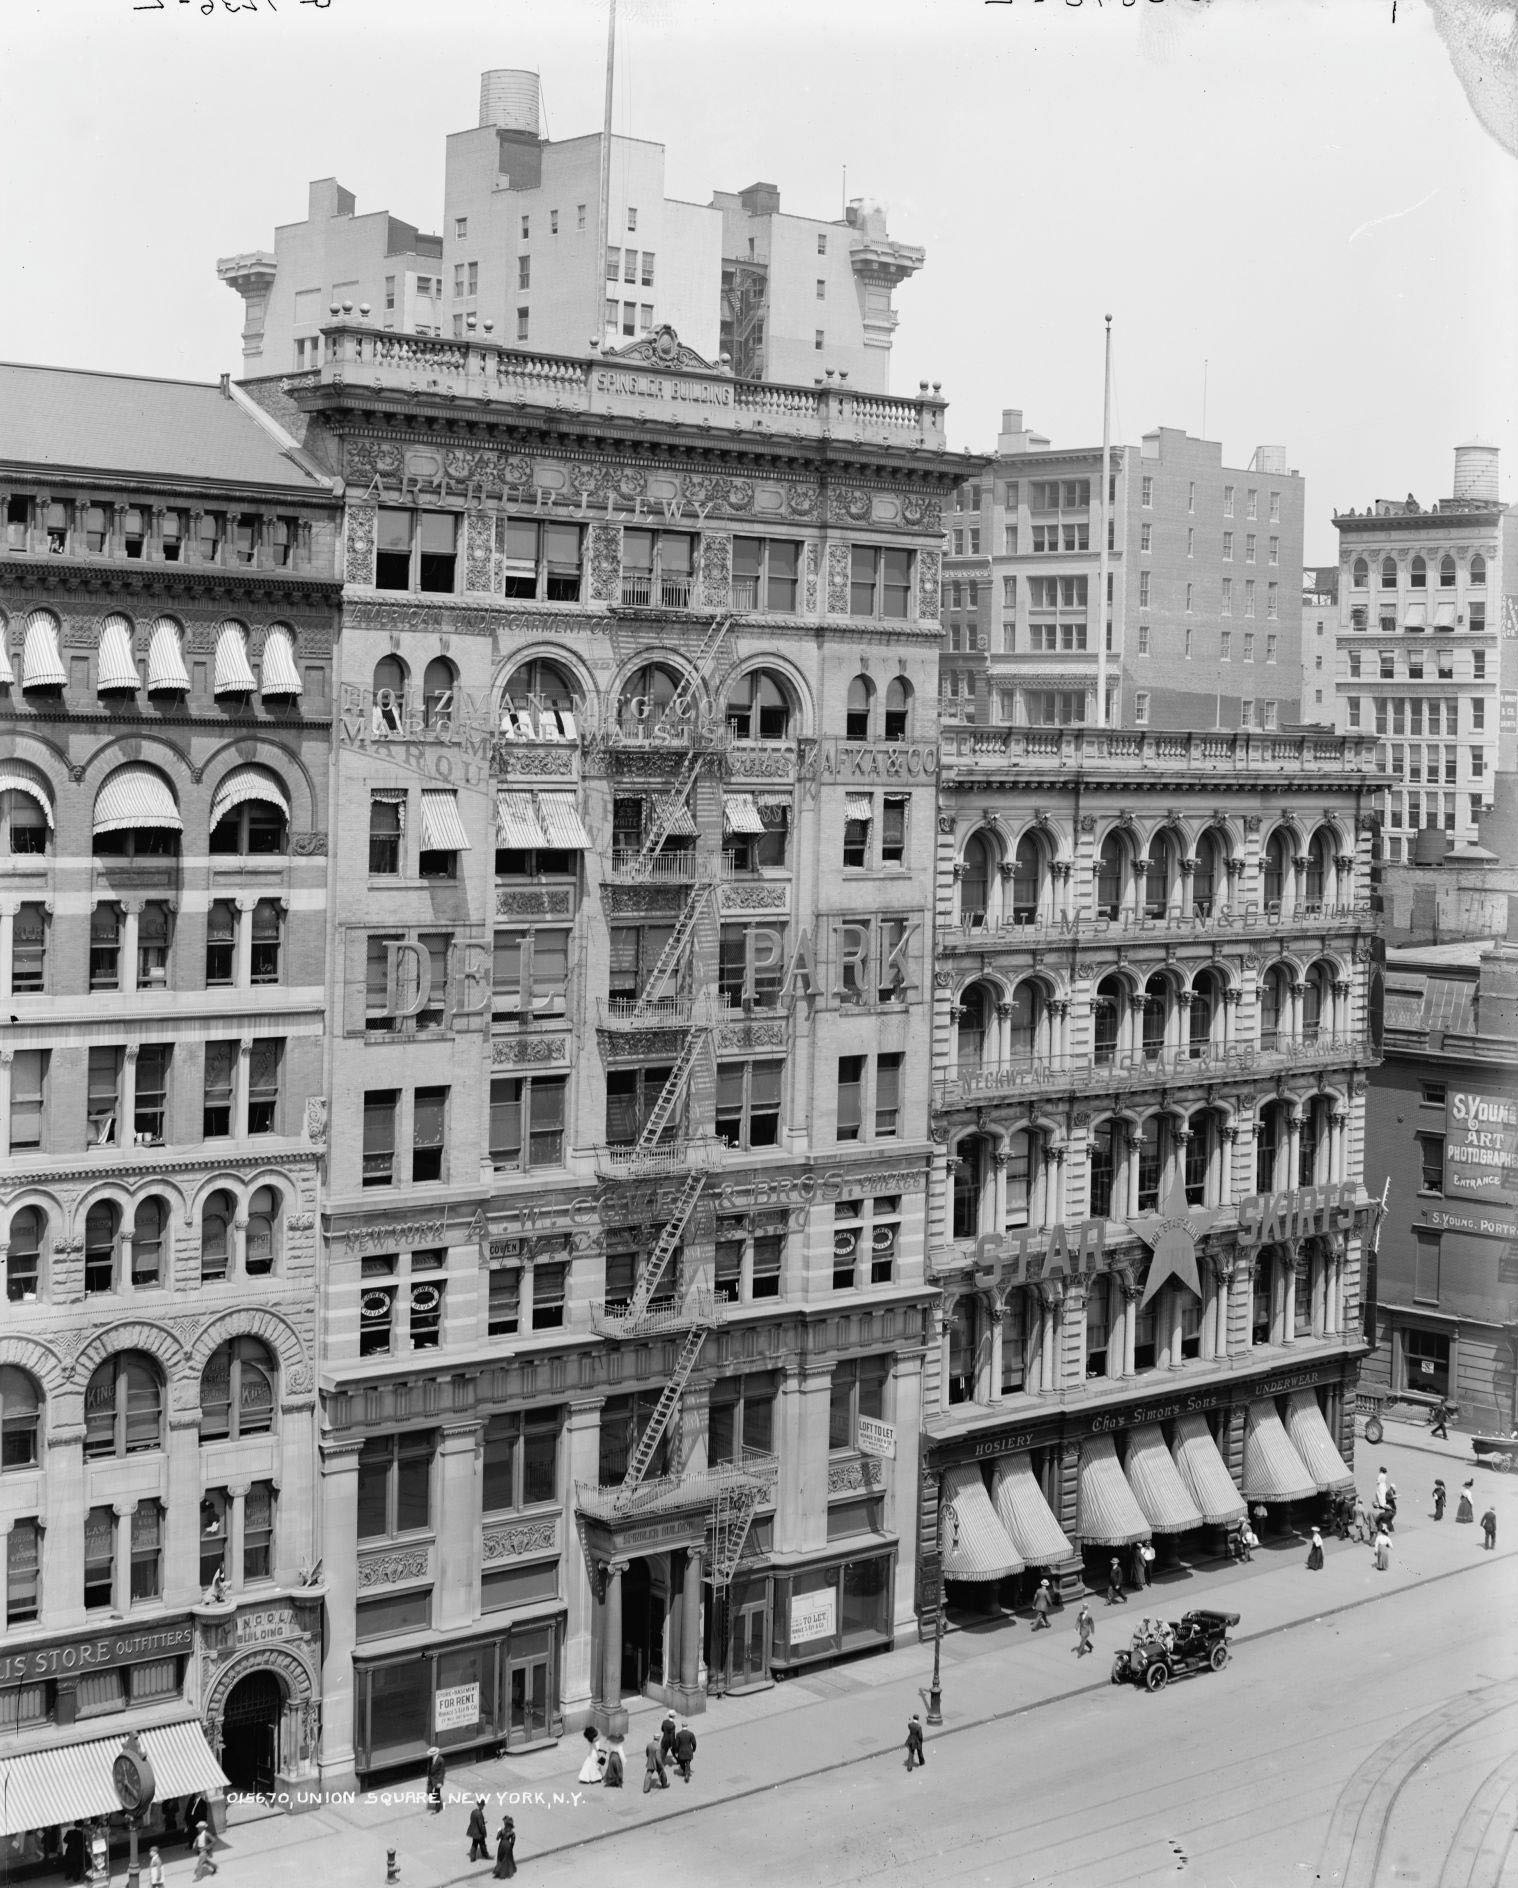 Union Square, New York City, 1915